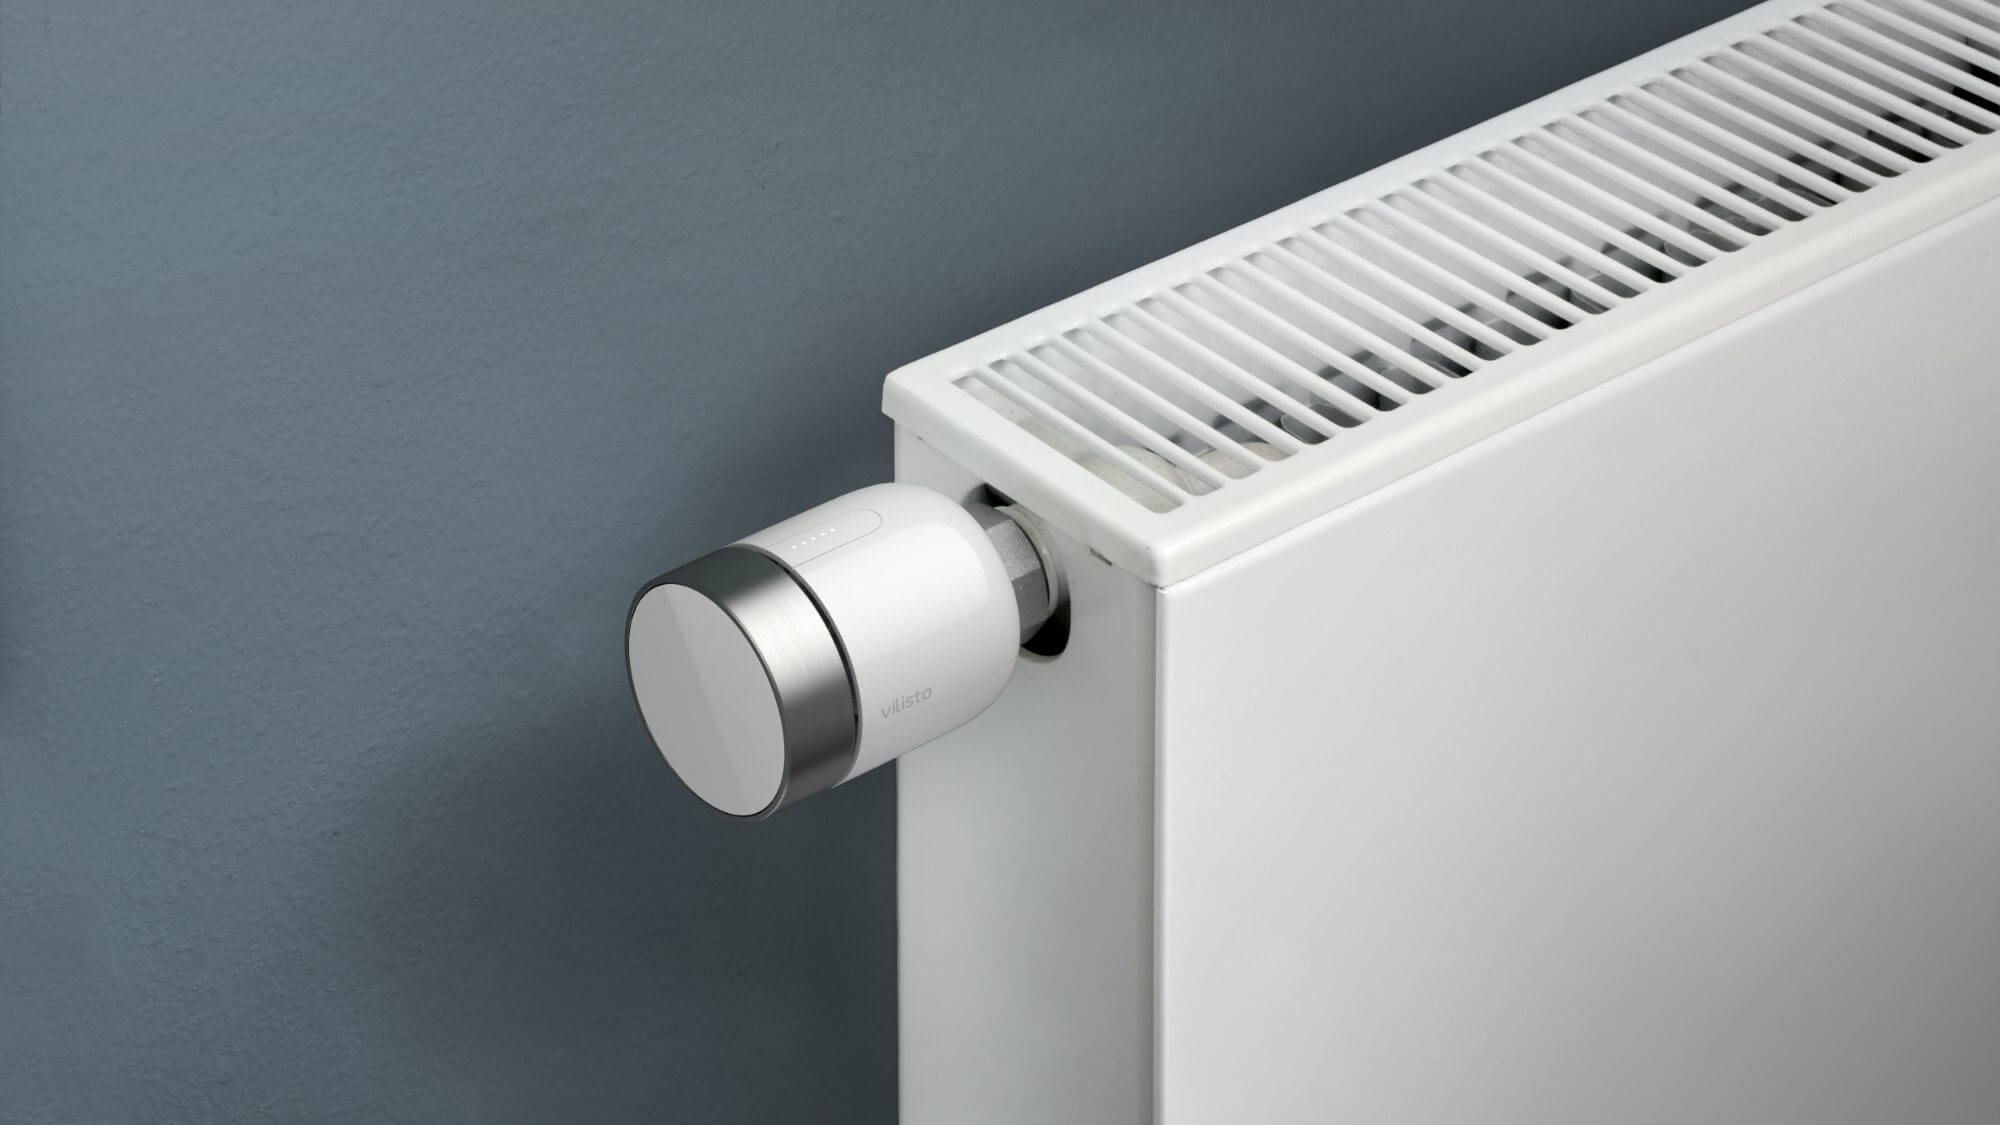 Vilisto Smart Home Thermostat Start-up Rendering